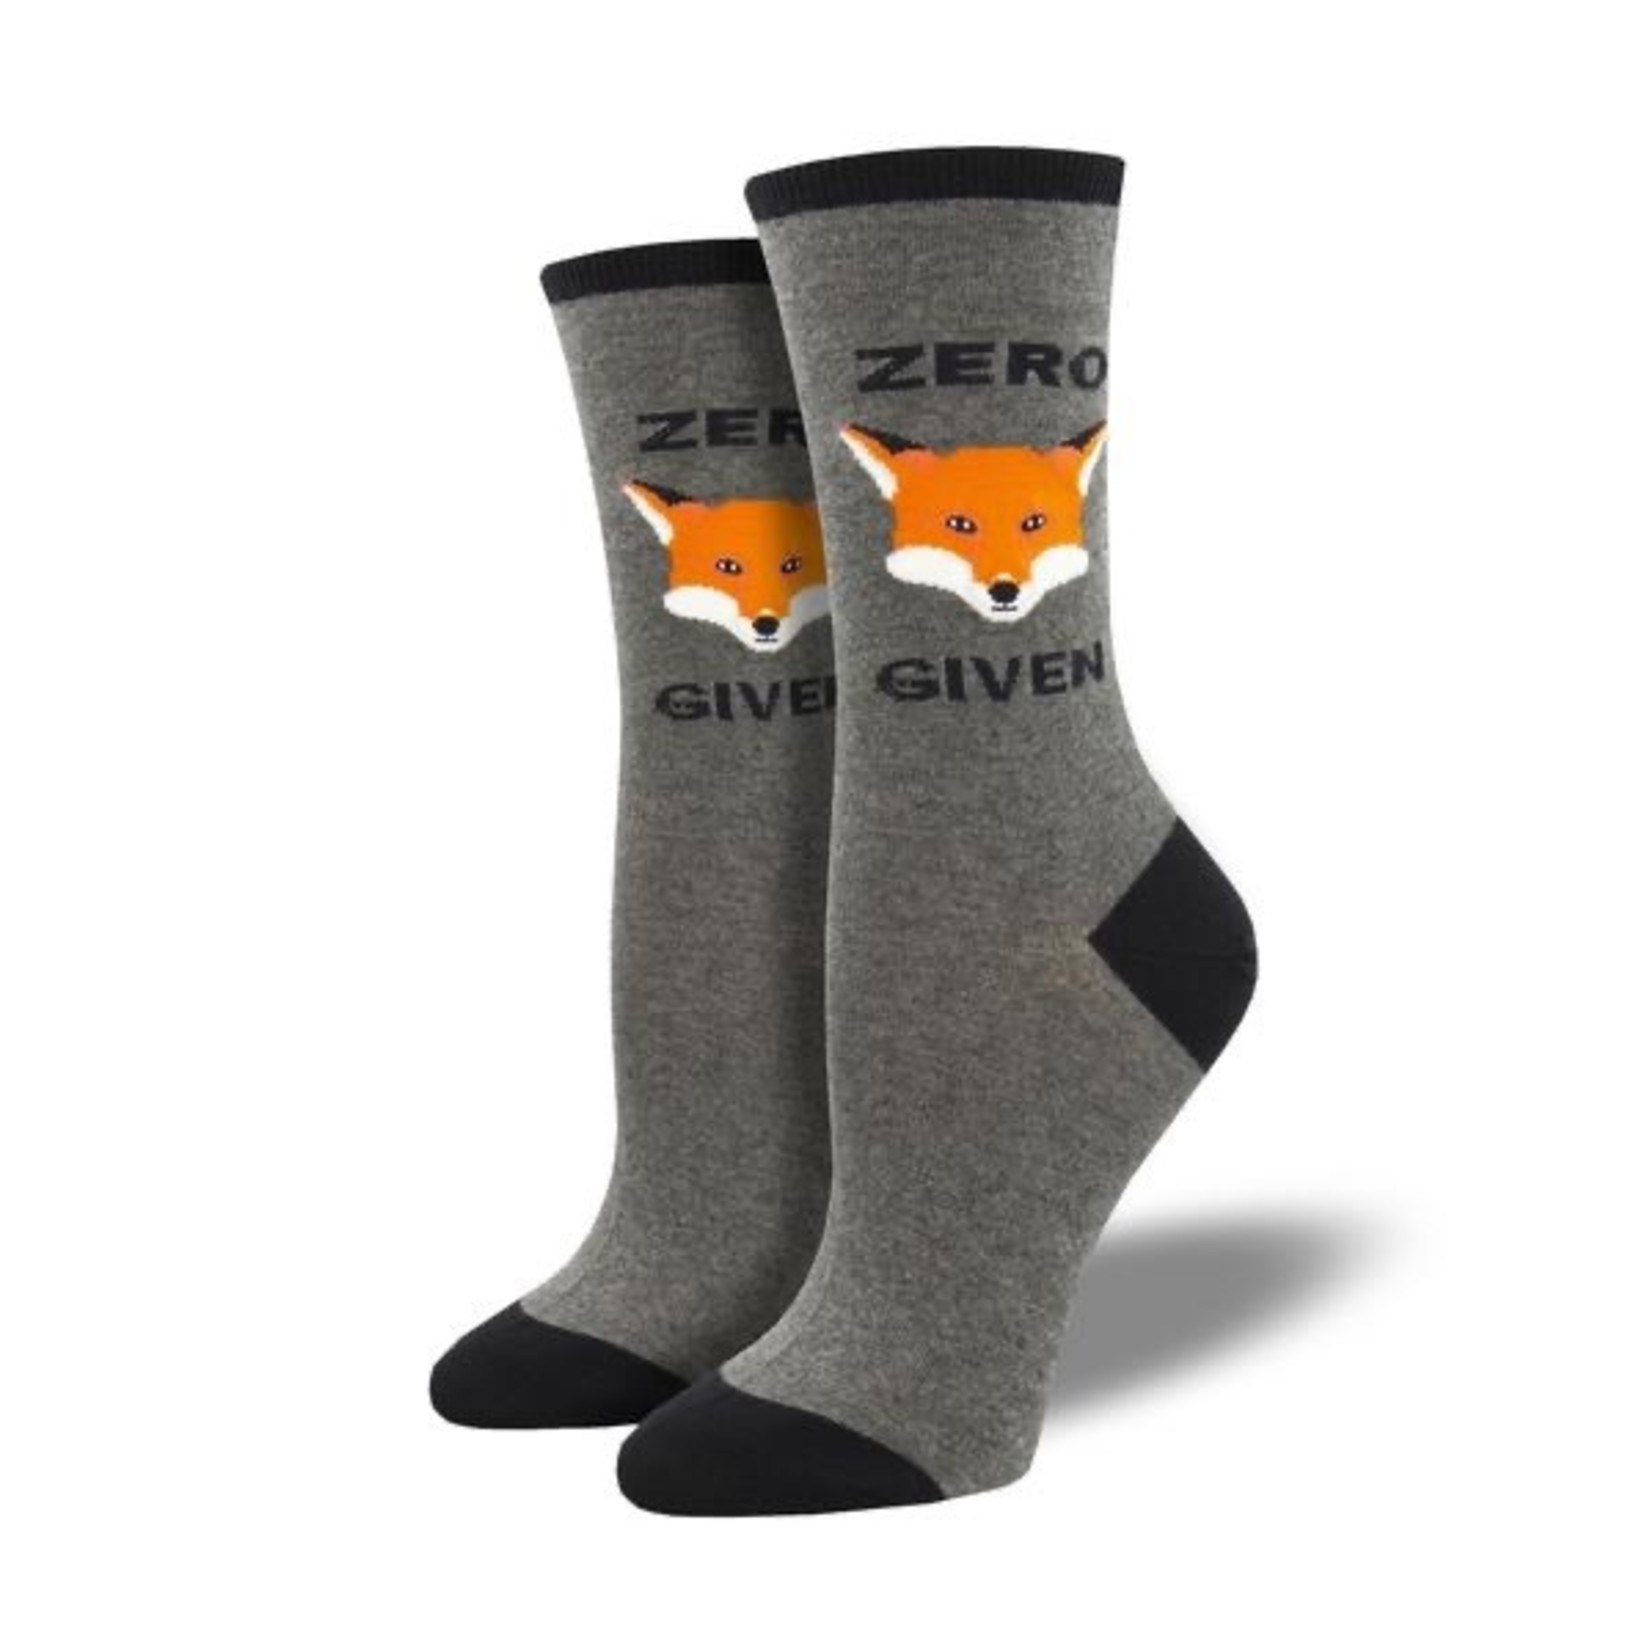 SockSmith Women's "Zero Fox Given" Sock